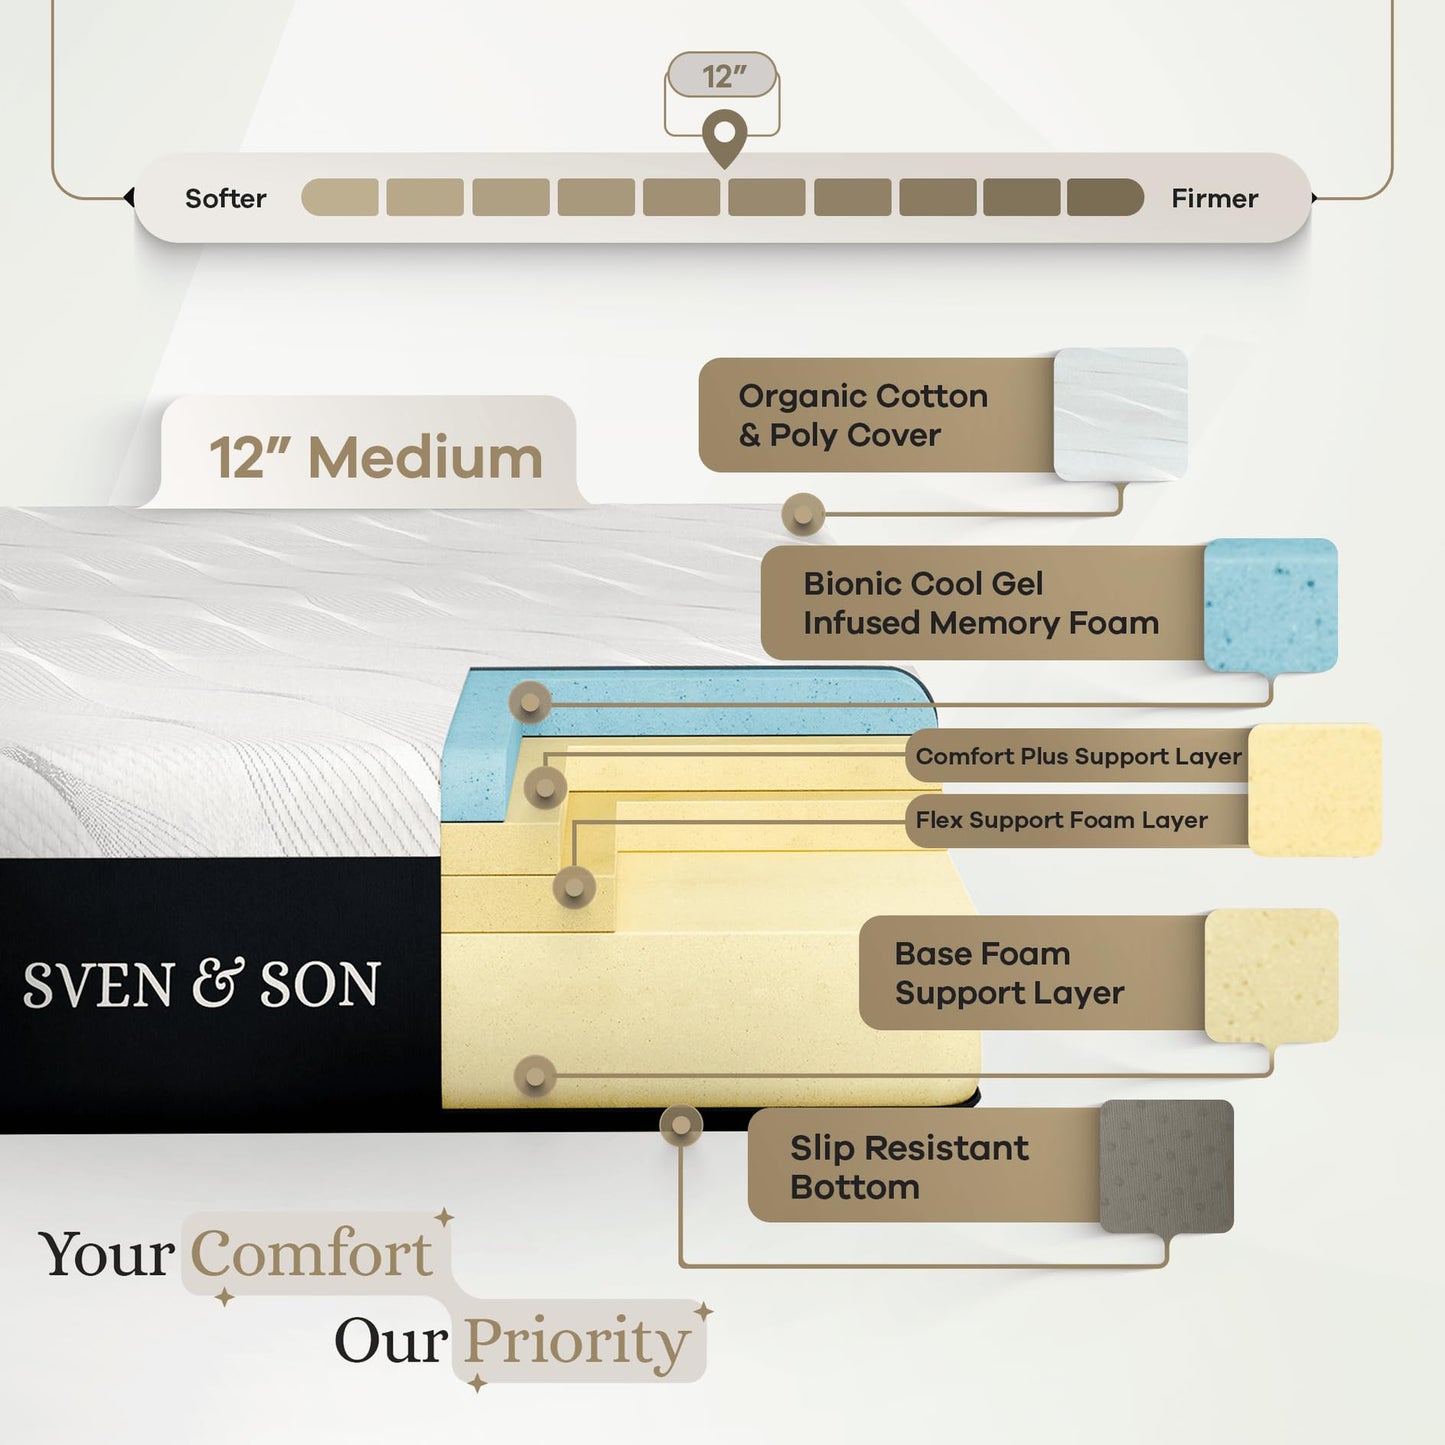 Sven & Son Luxury Cool Gel Memory Foam Mattress, Premium Bed-in-a-Box, CertiPUR-US, Made in The USA, 12 inch Medium - Split California King